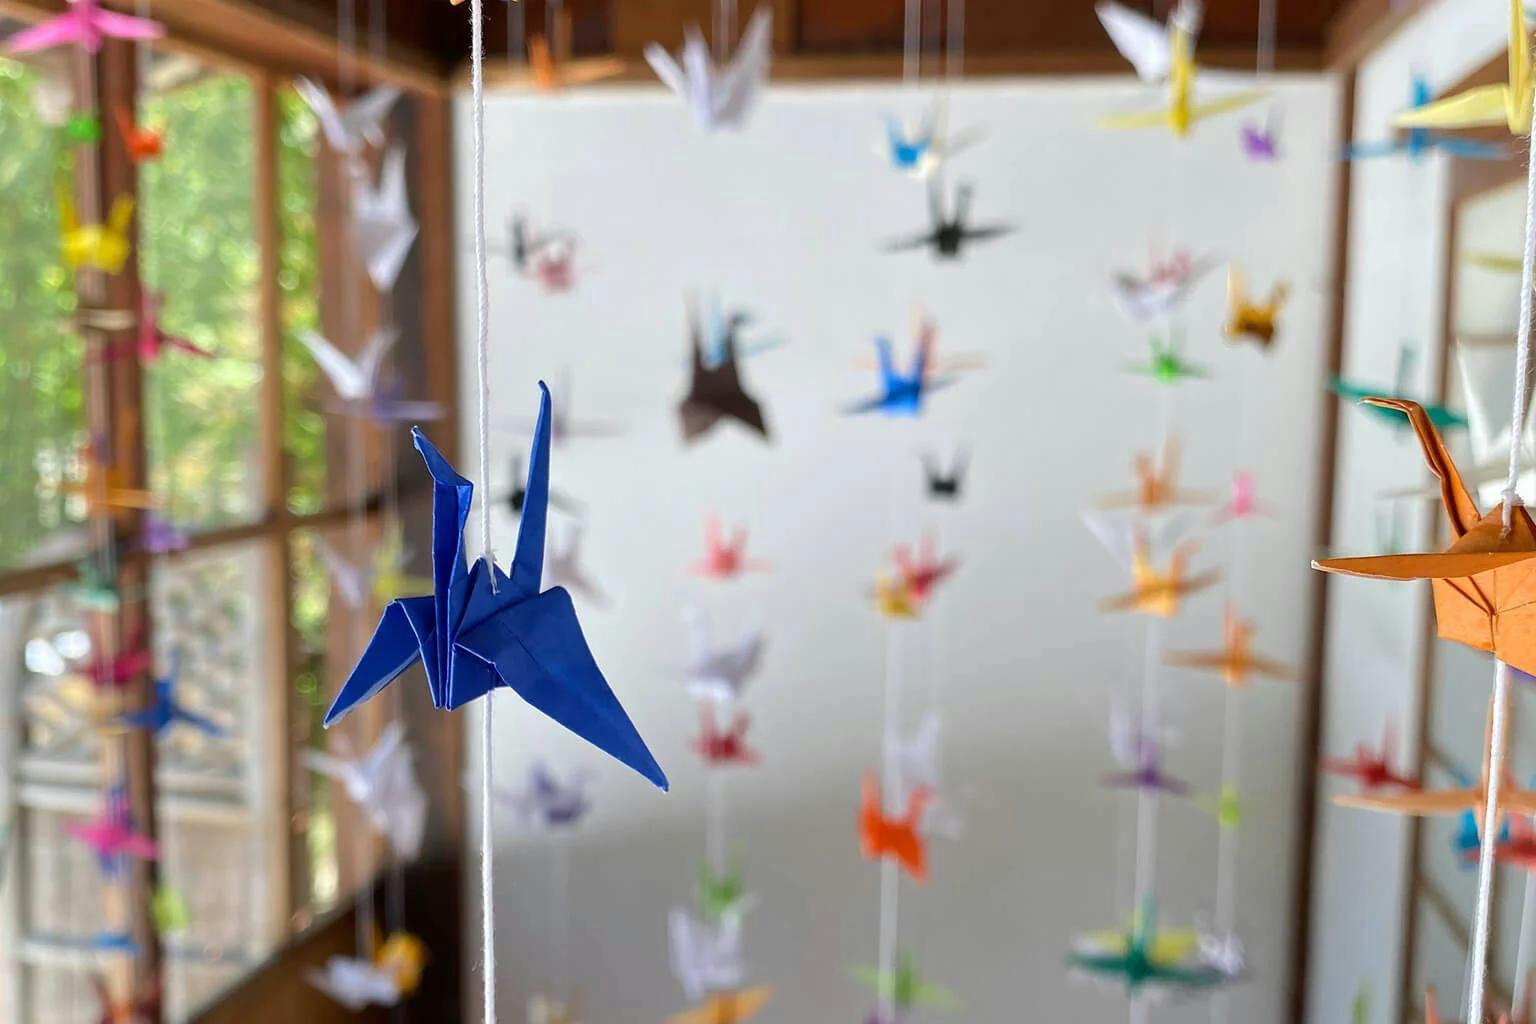 Origami cranes